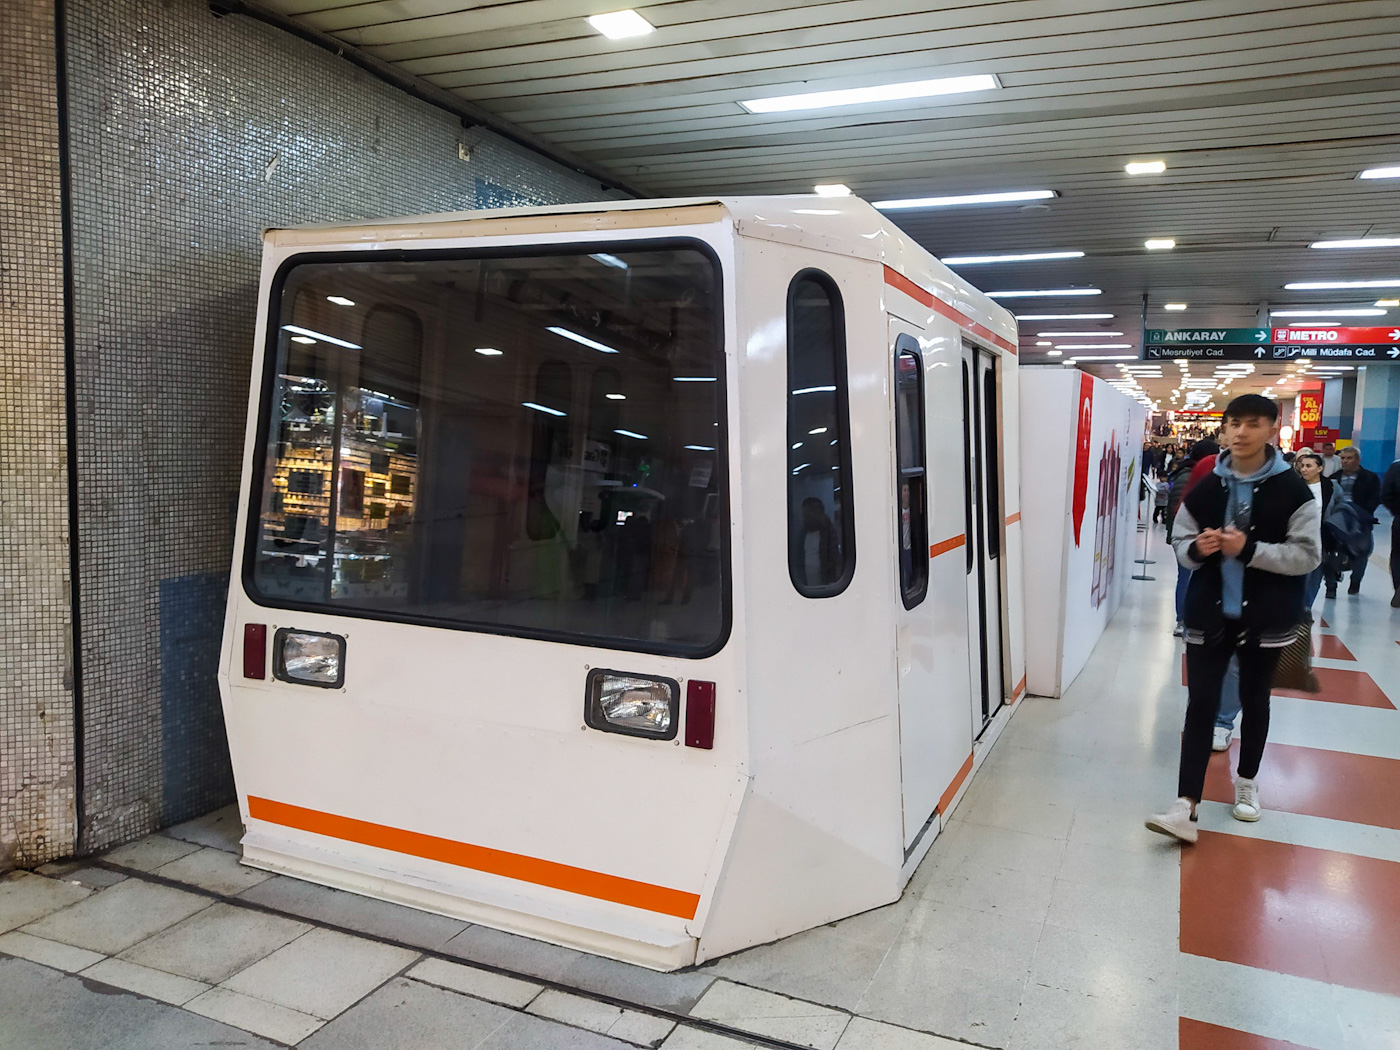 Анкара — Метрополитен — Зелёная линия (Ankaray Light Metro); Анкара — Метрополитен — Красная линия; Анкара — Метрополитен — Разные фотографии